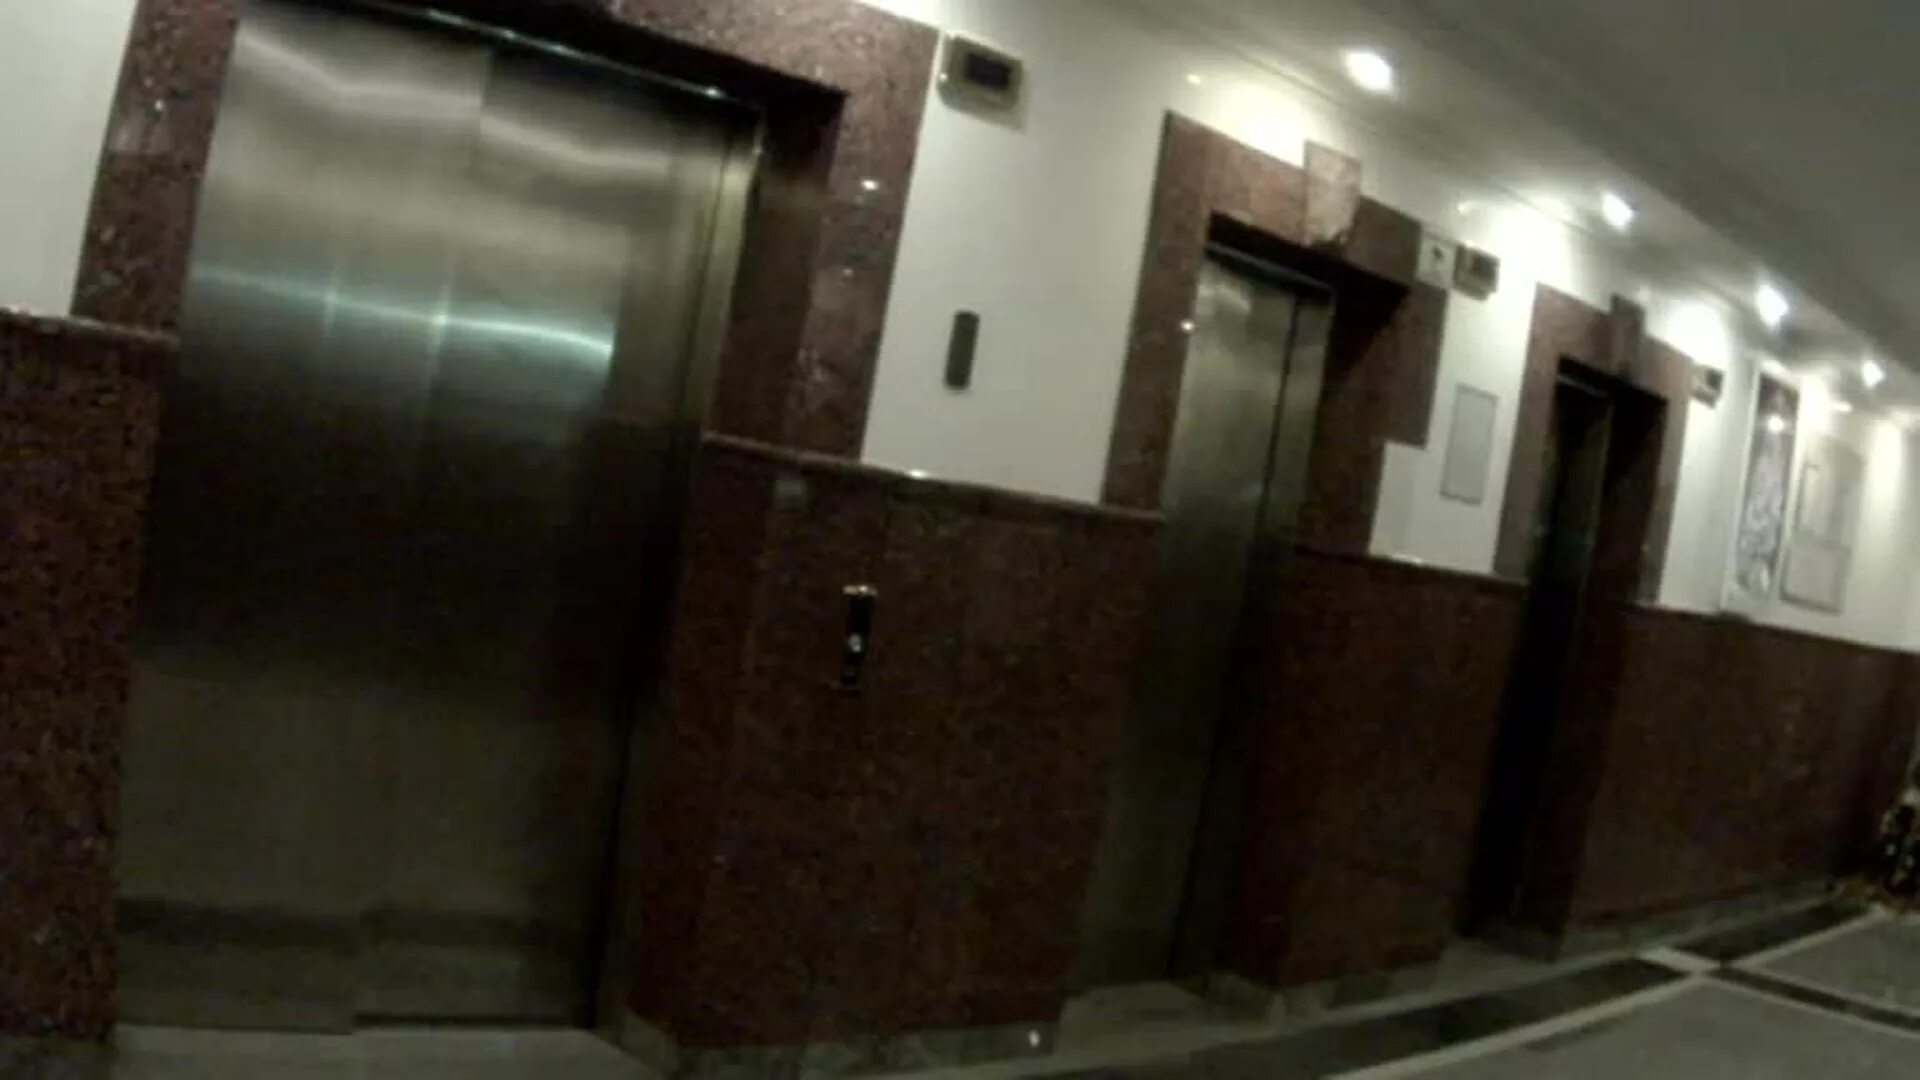 Алые паруса лифт. Алые паруса ЖК лифт. ЖК Алые паруса трагедия в лифте. ЖК Алые паруса лифт провалился.